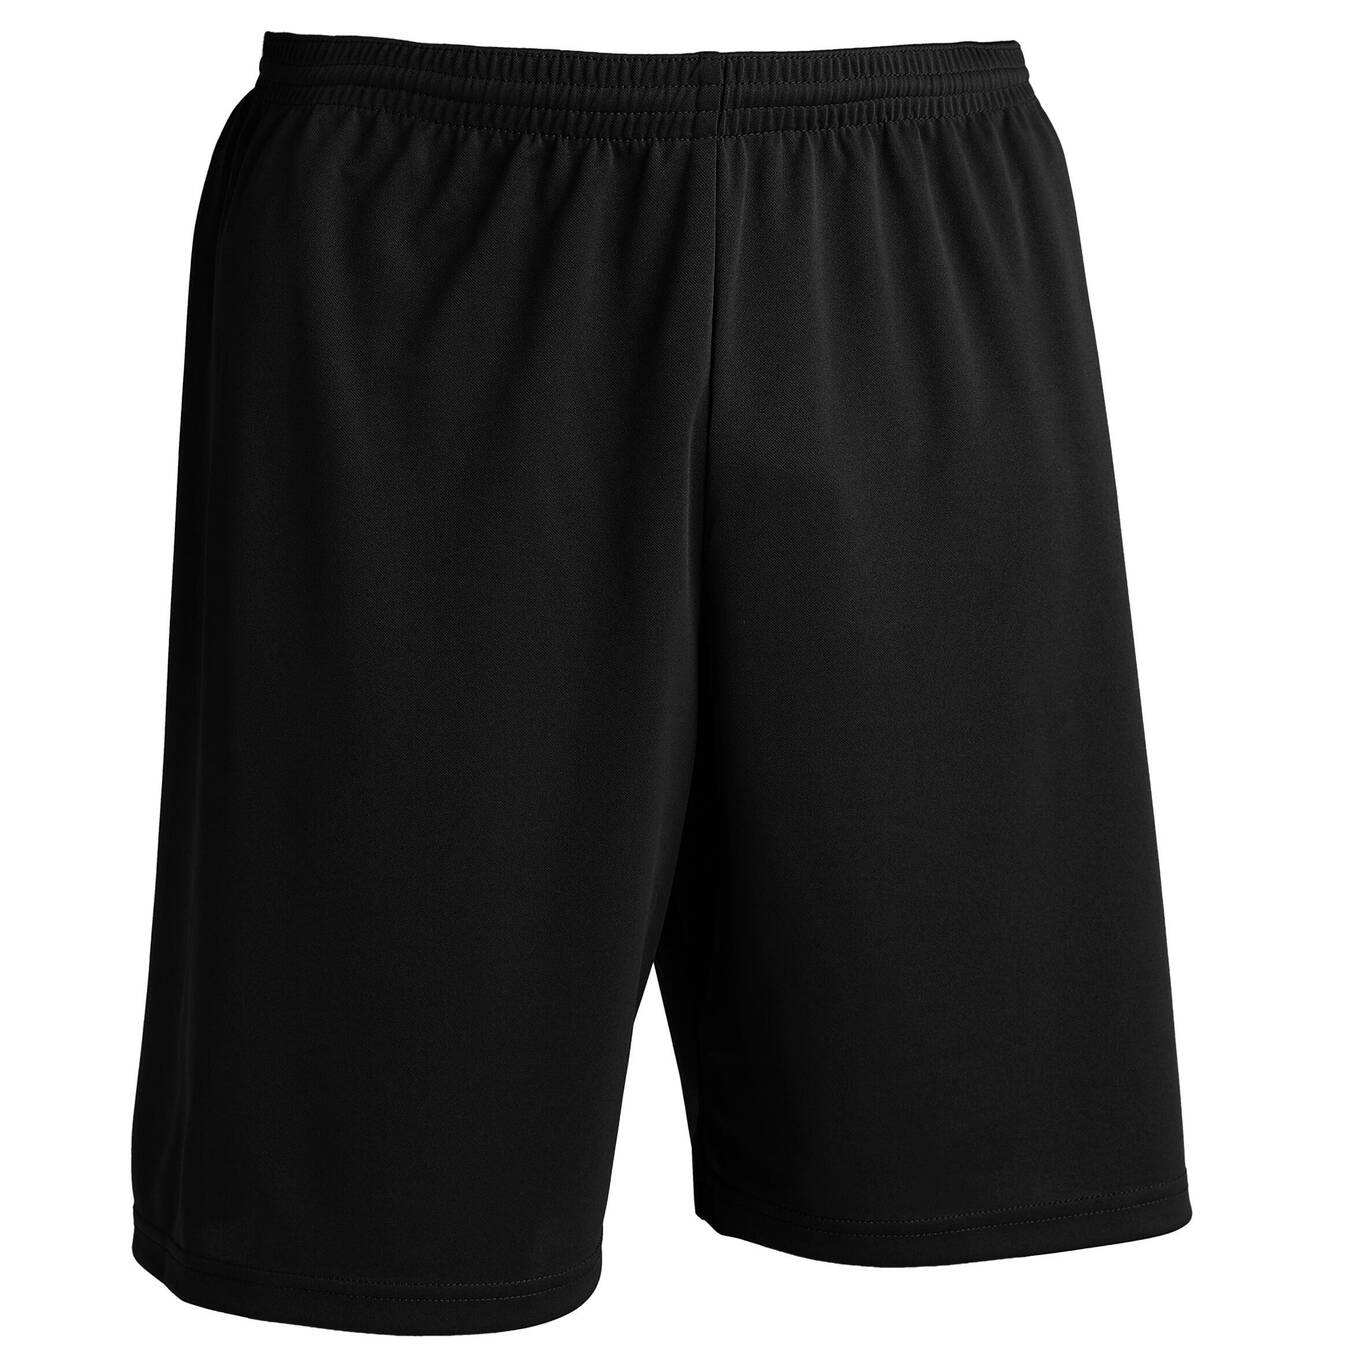 F100 Adult Football Shorts - Black - Decathlon